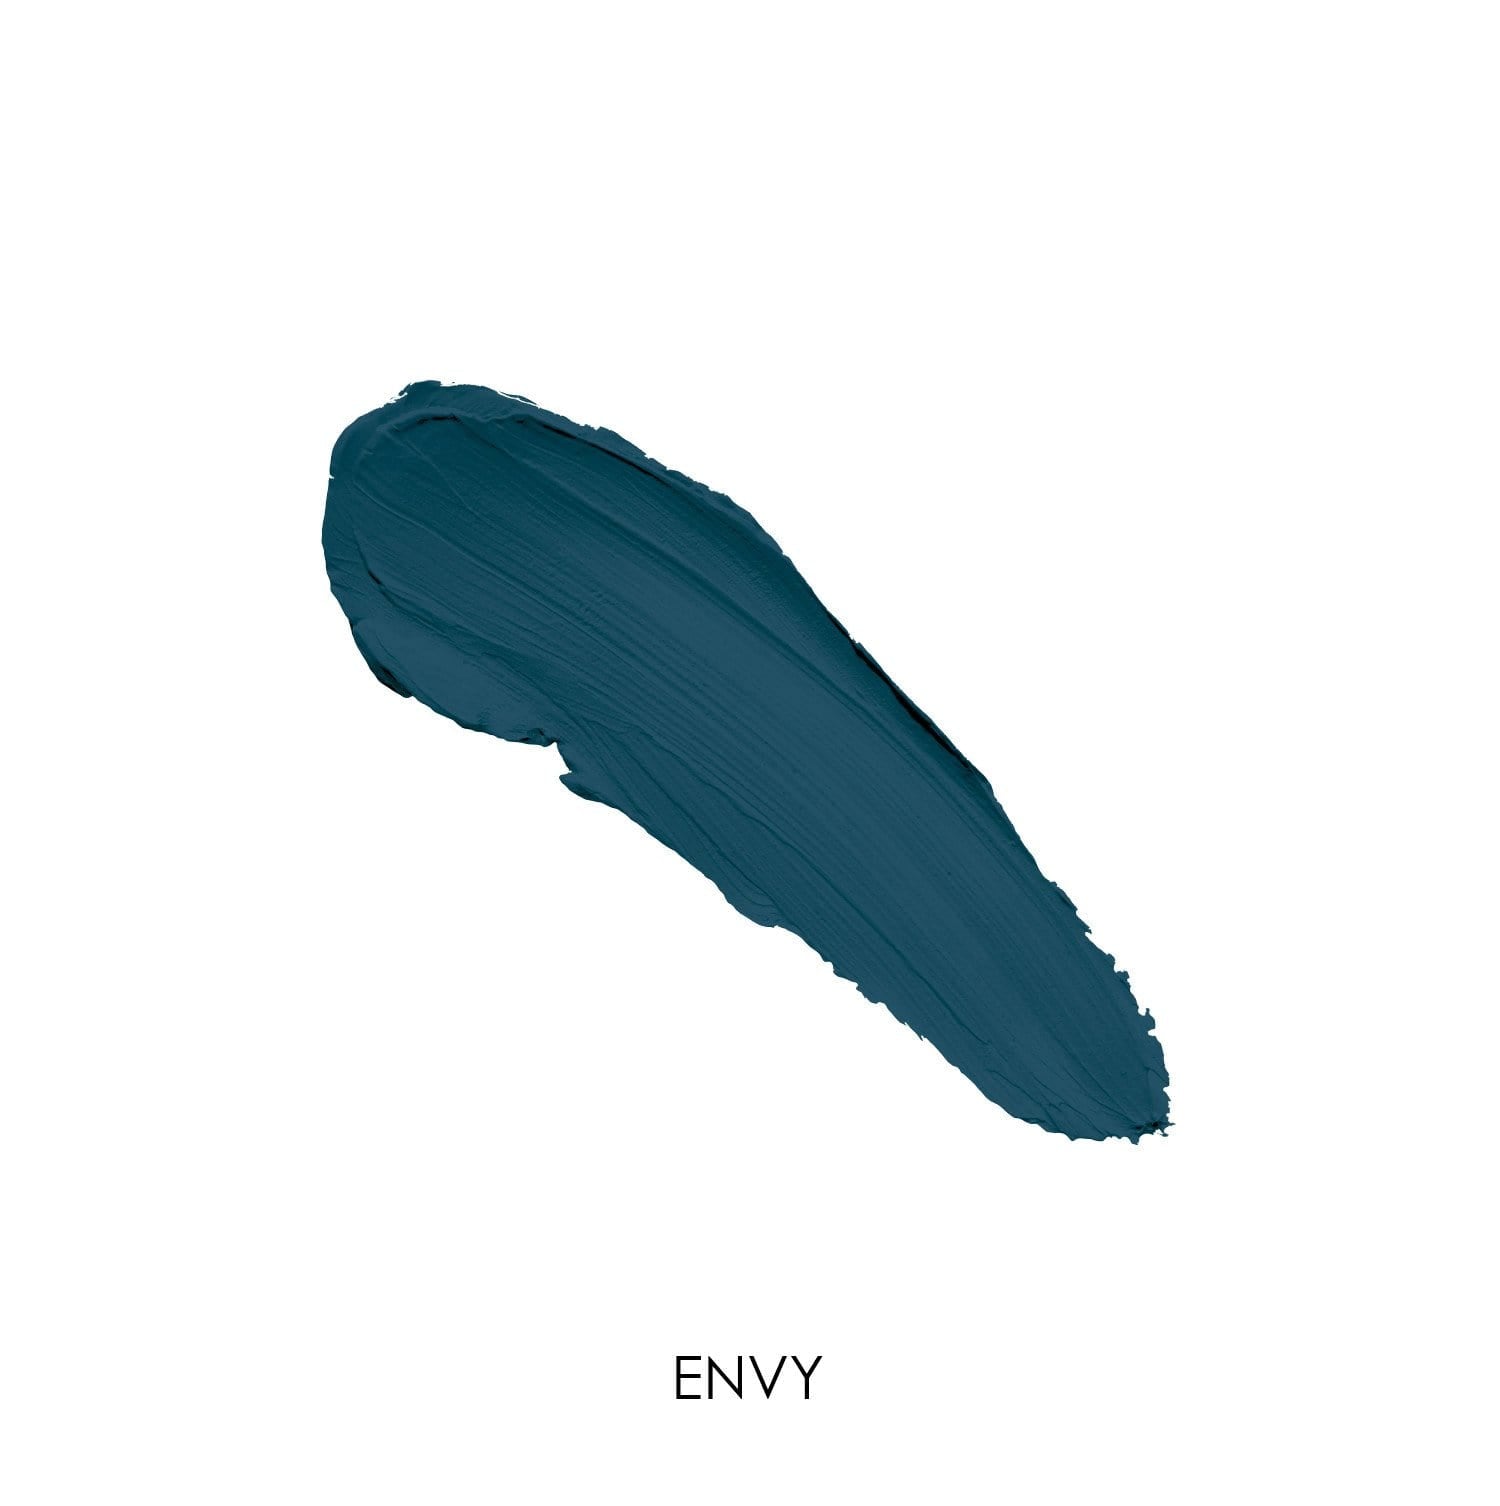 Envy - Teal